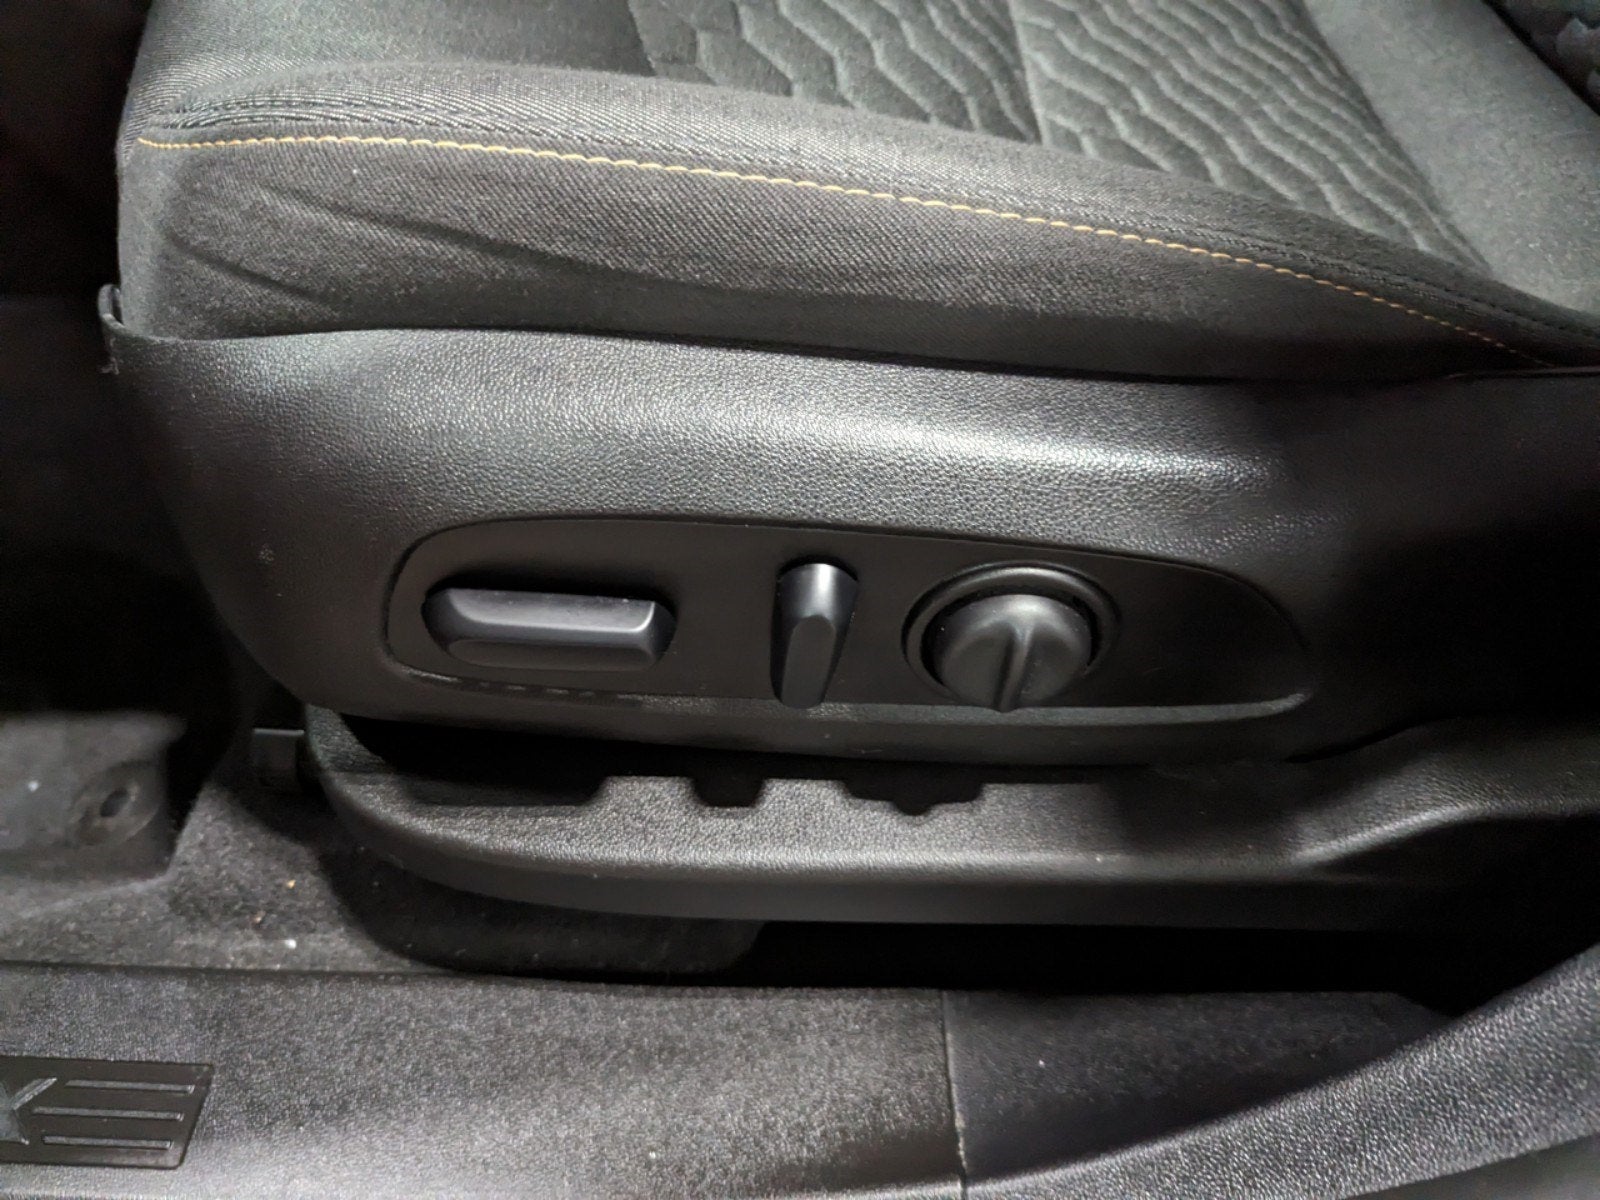 2018 Chevrolet Equinox LT Front Wheel Drive Remote Start System Premium Cloth Preferred Equipment Pkg